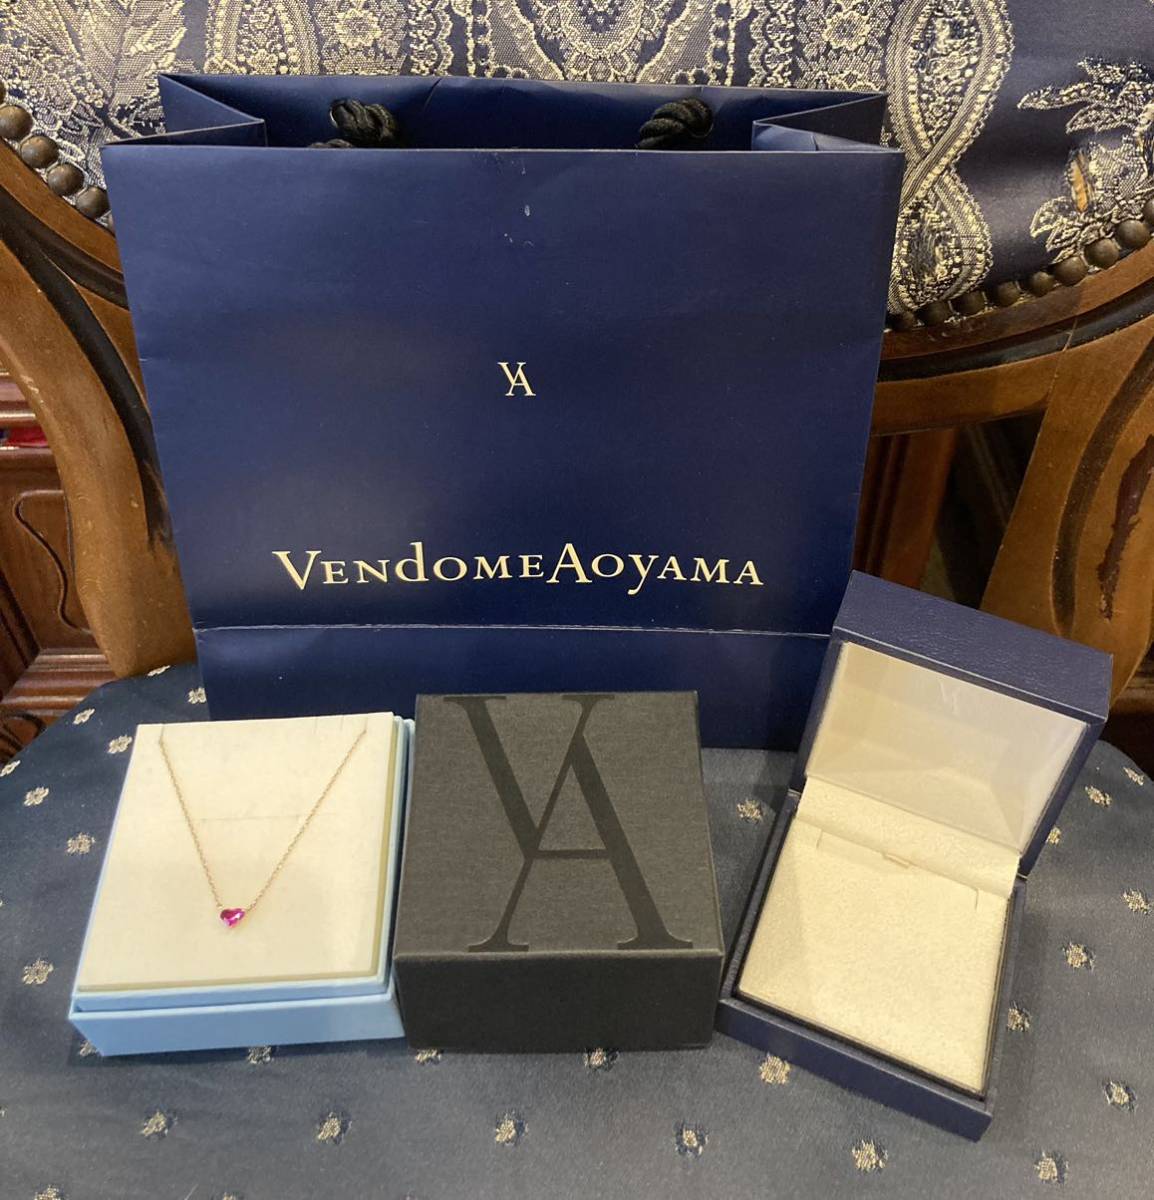  Vendome Aoyama VENDOME колье K10PG аксессуары рубин Heart коробка бумажный пакет лента упаковка подарок 